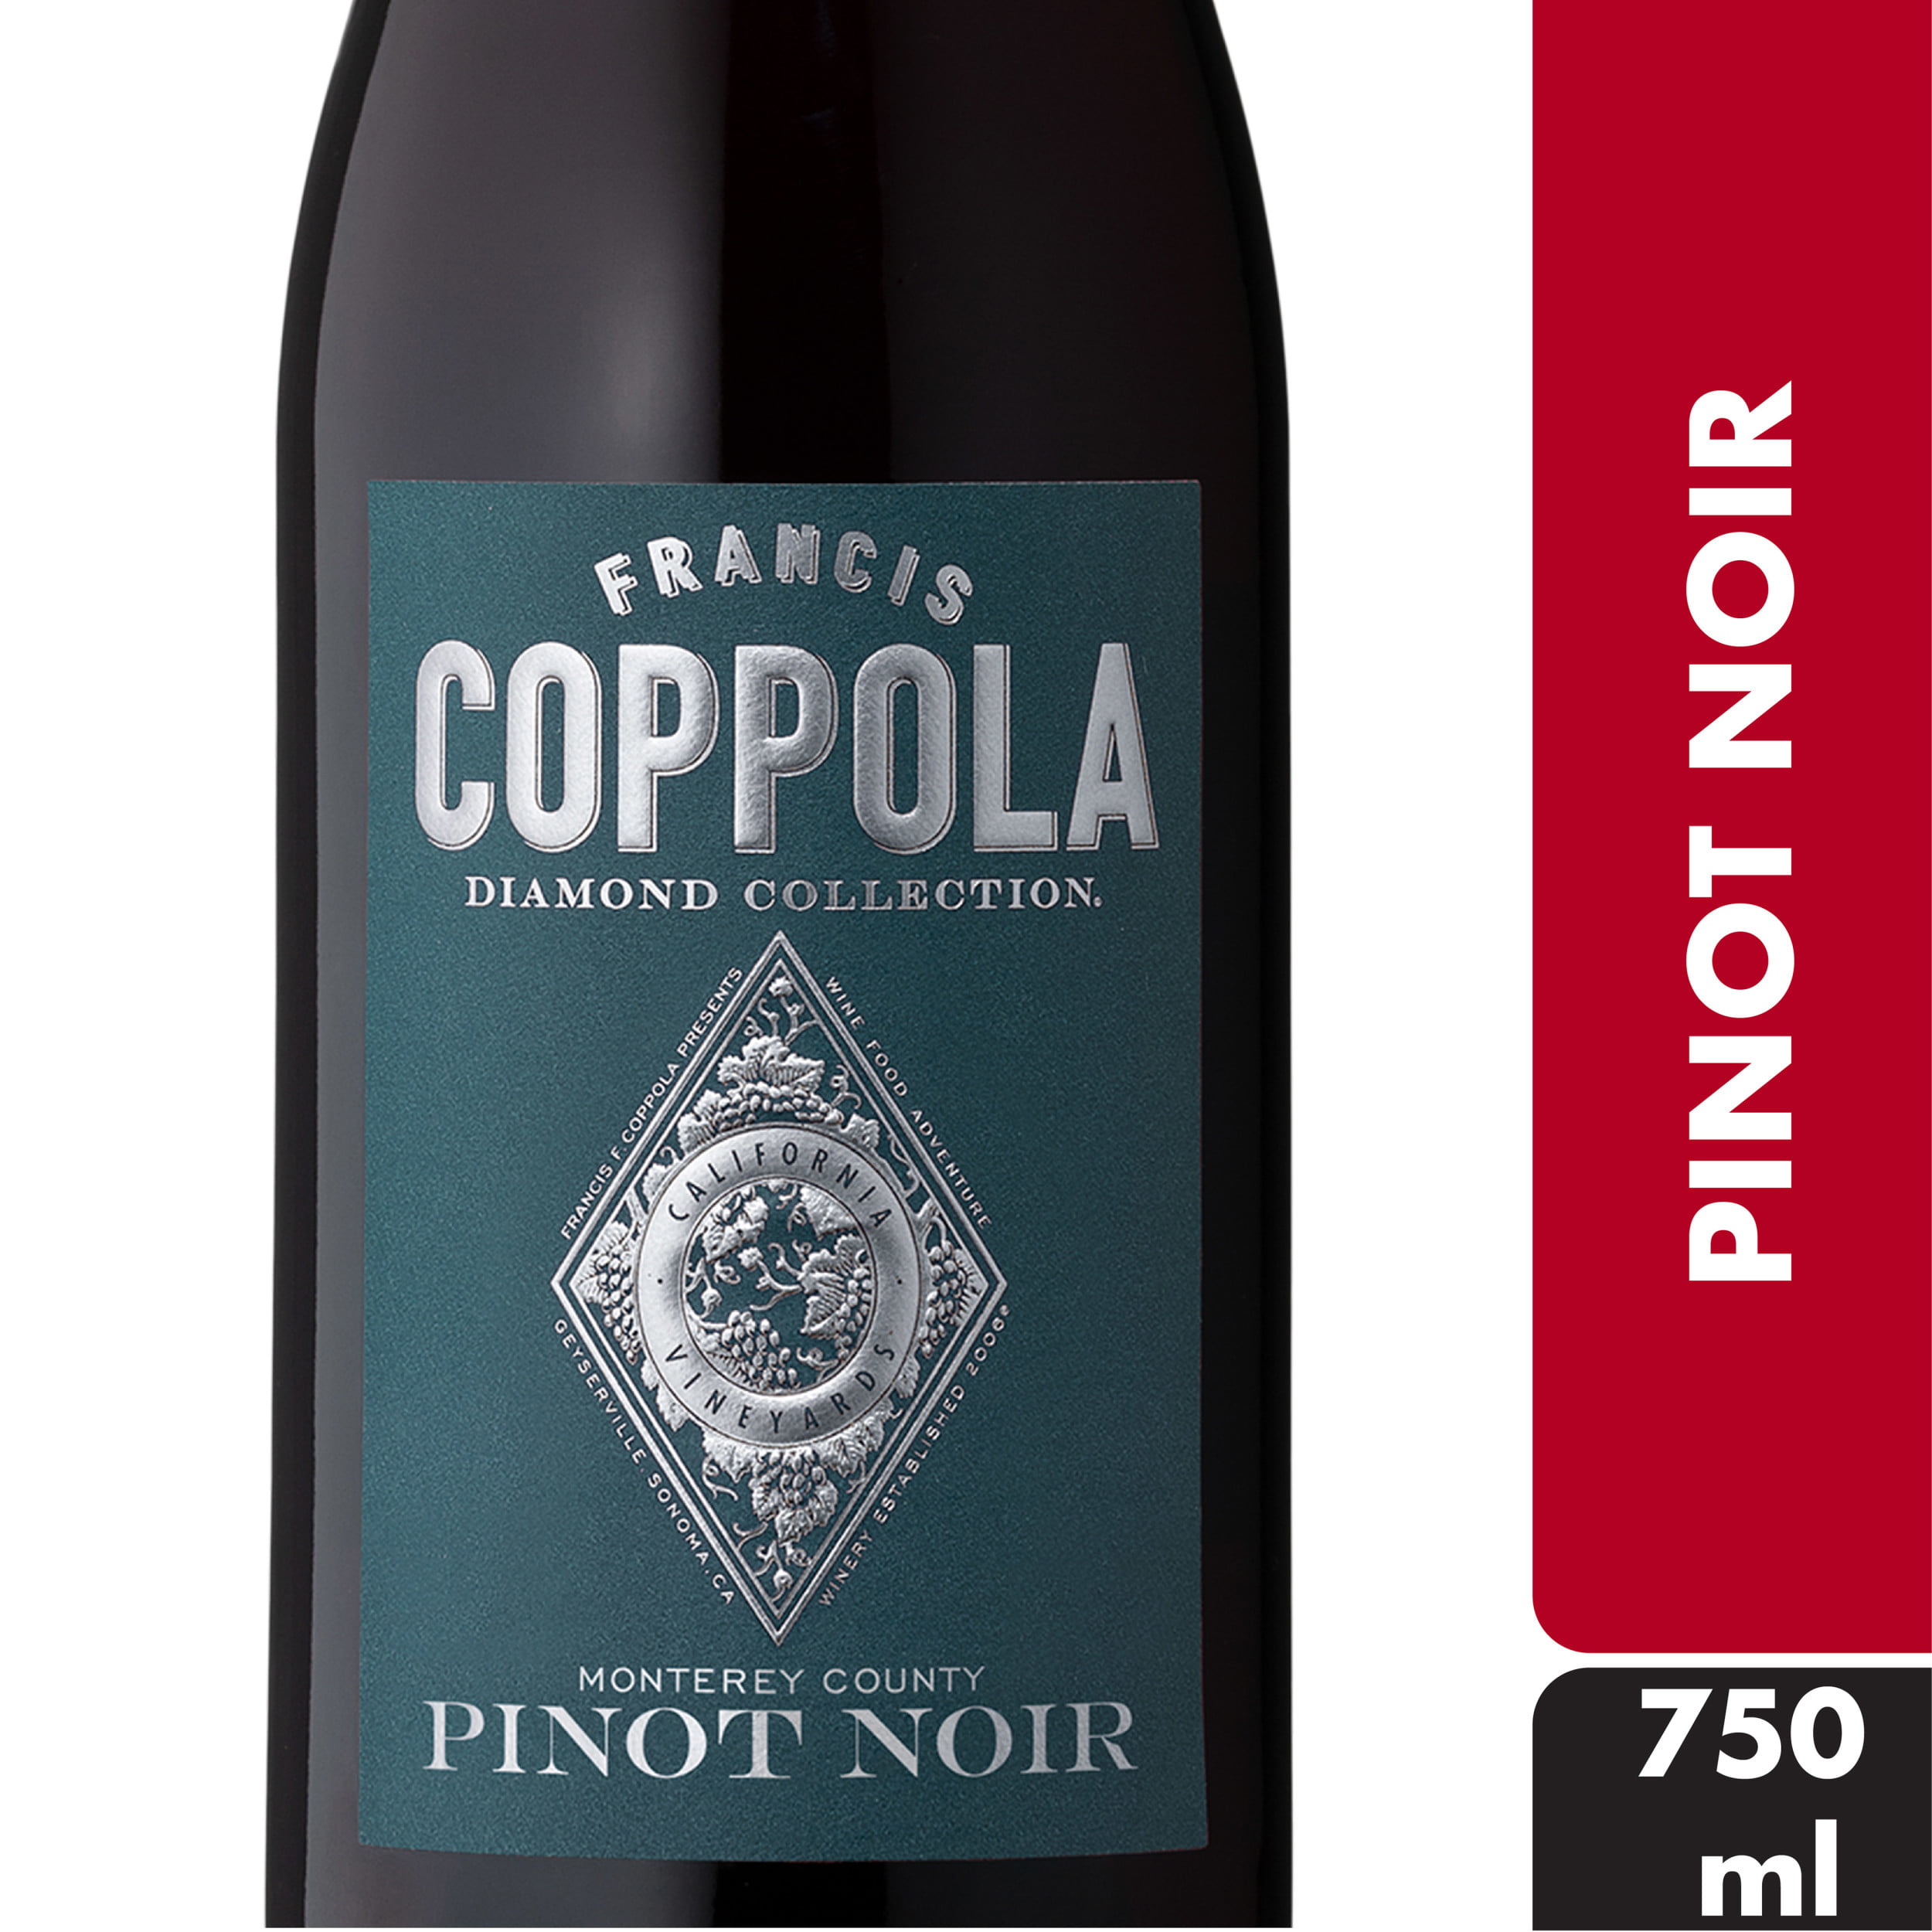 francis-coppola-diamond-collection-diamond-pinot-noir-wine-750-ml